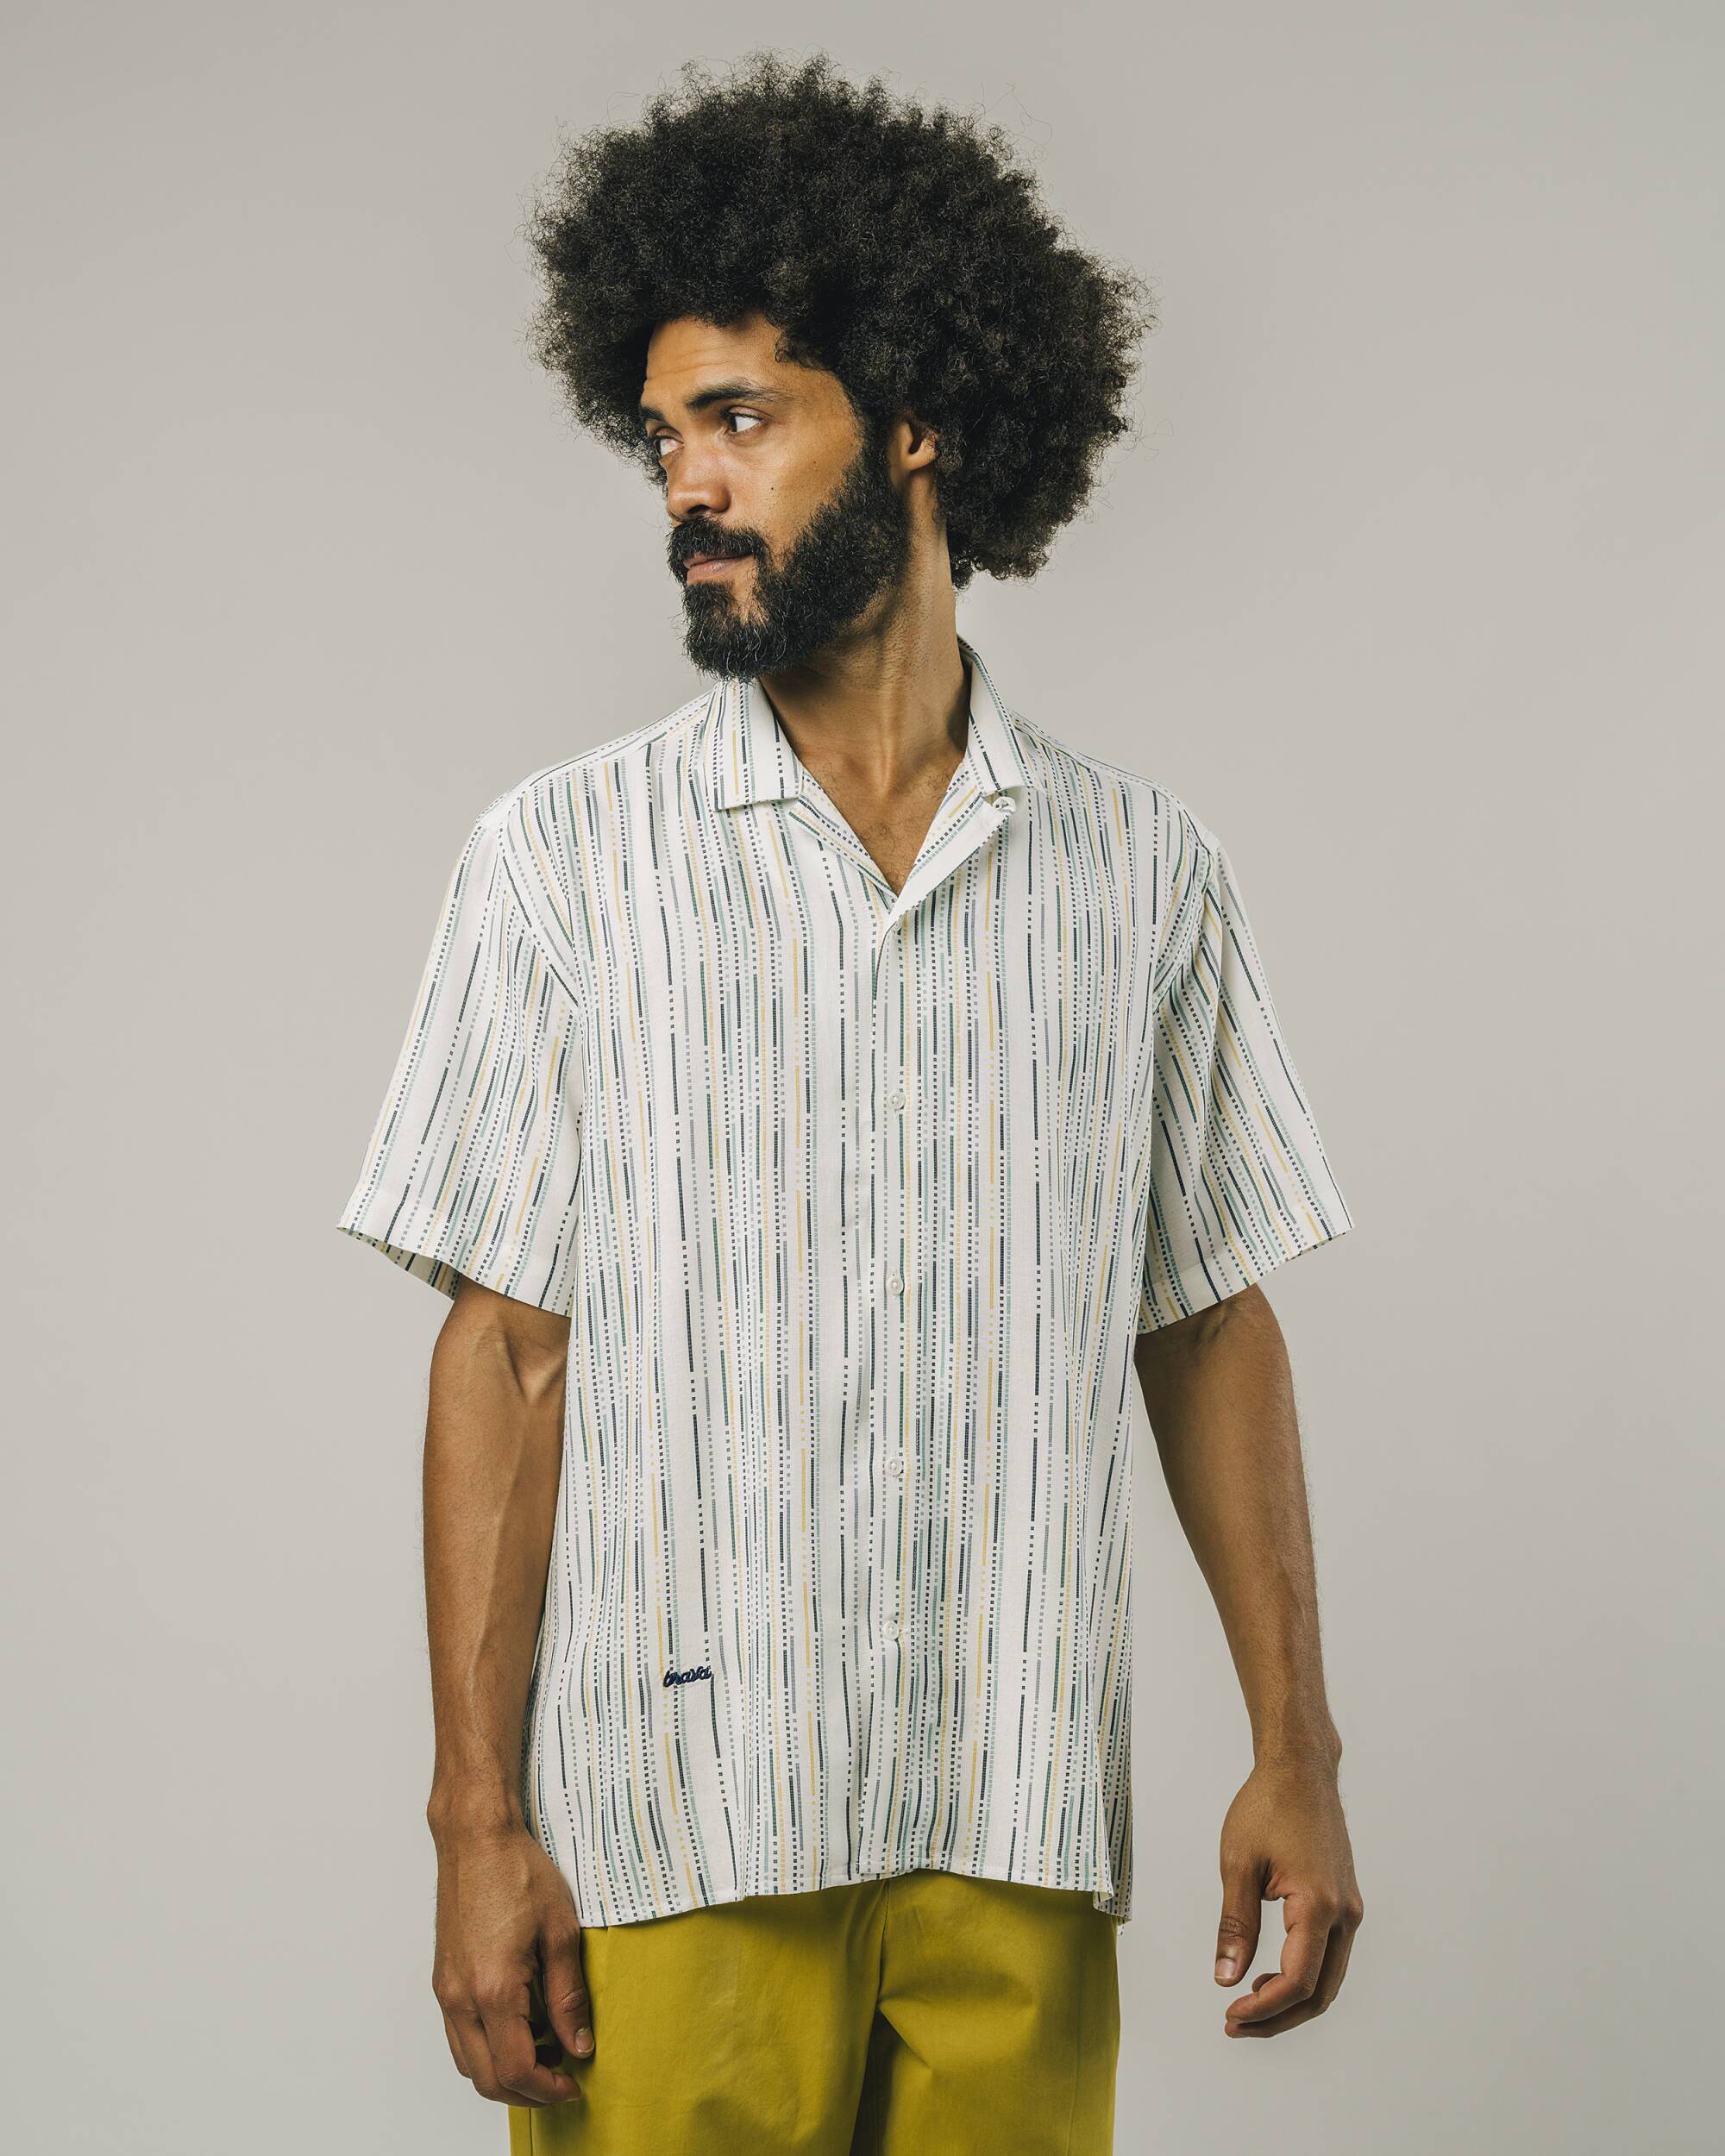 Colorful, short-sleeved Stripes Aloha shirt made of viscose from Brava Fabrics